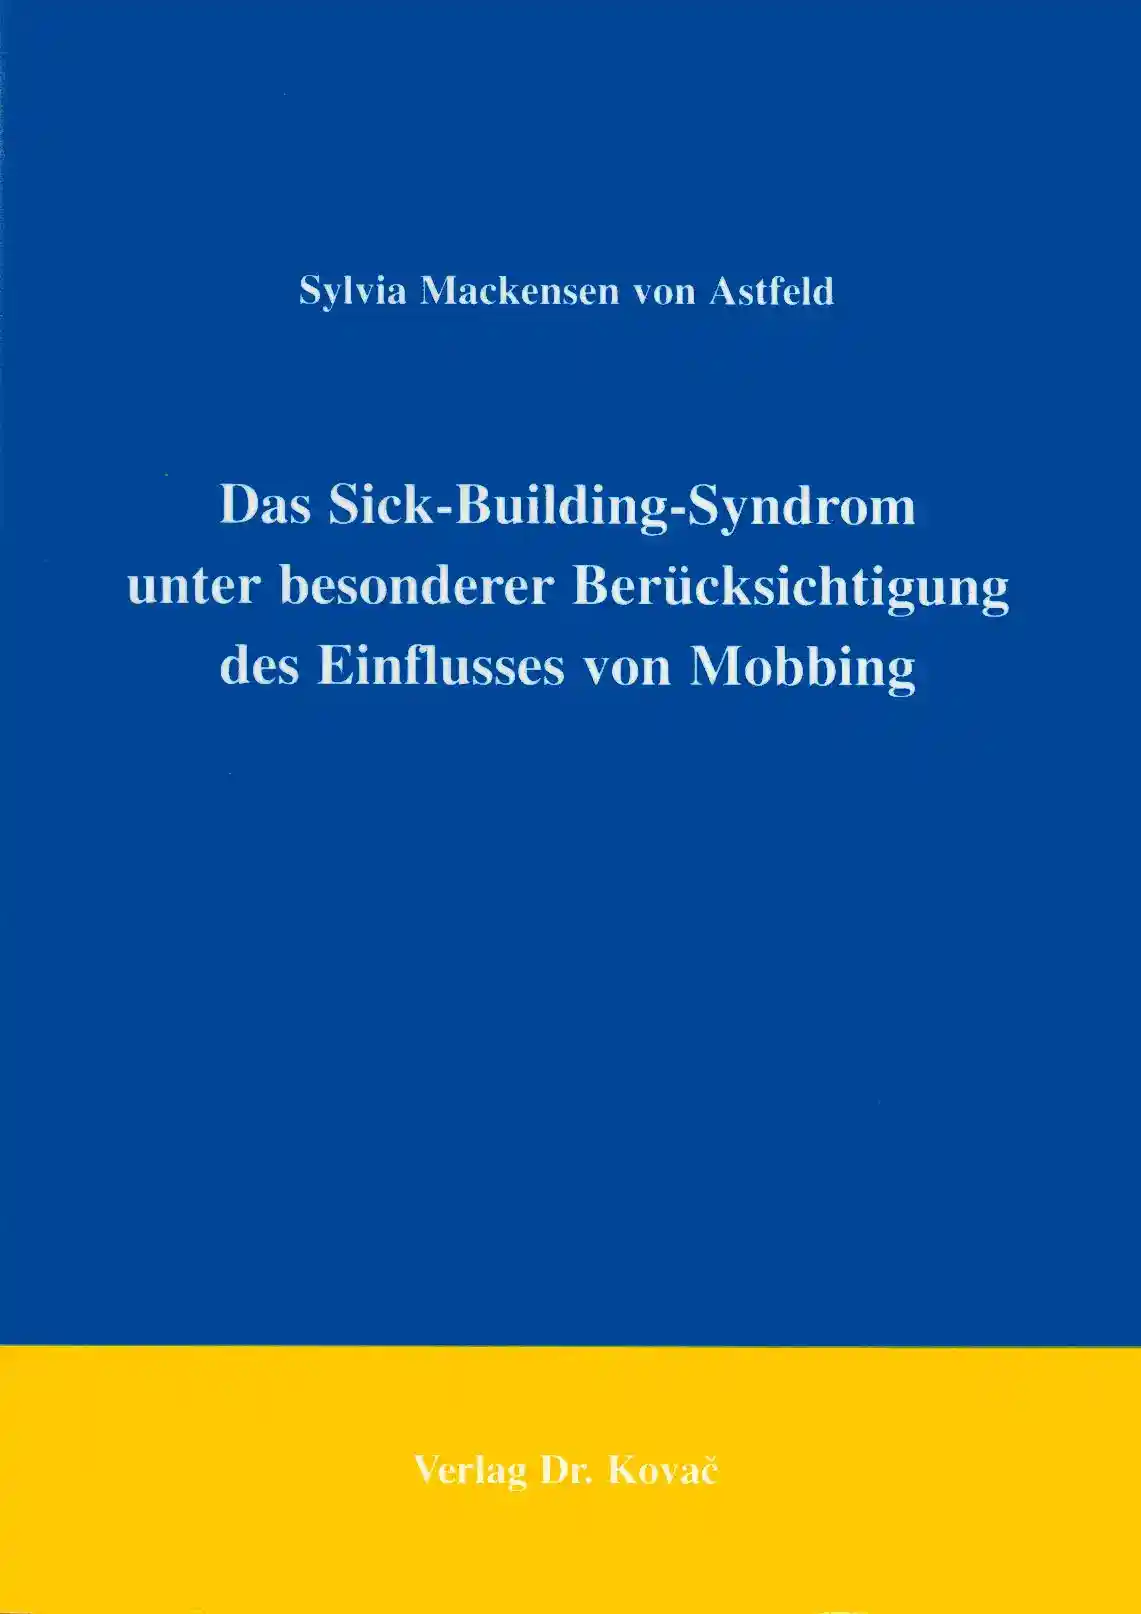 Das Sick-Building-Syndrom (Doktorarbeit)